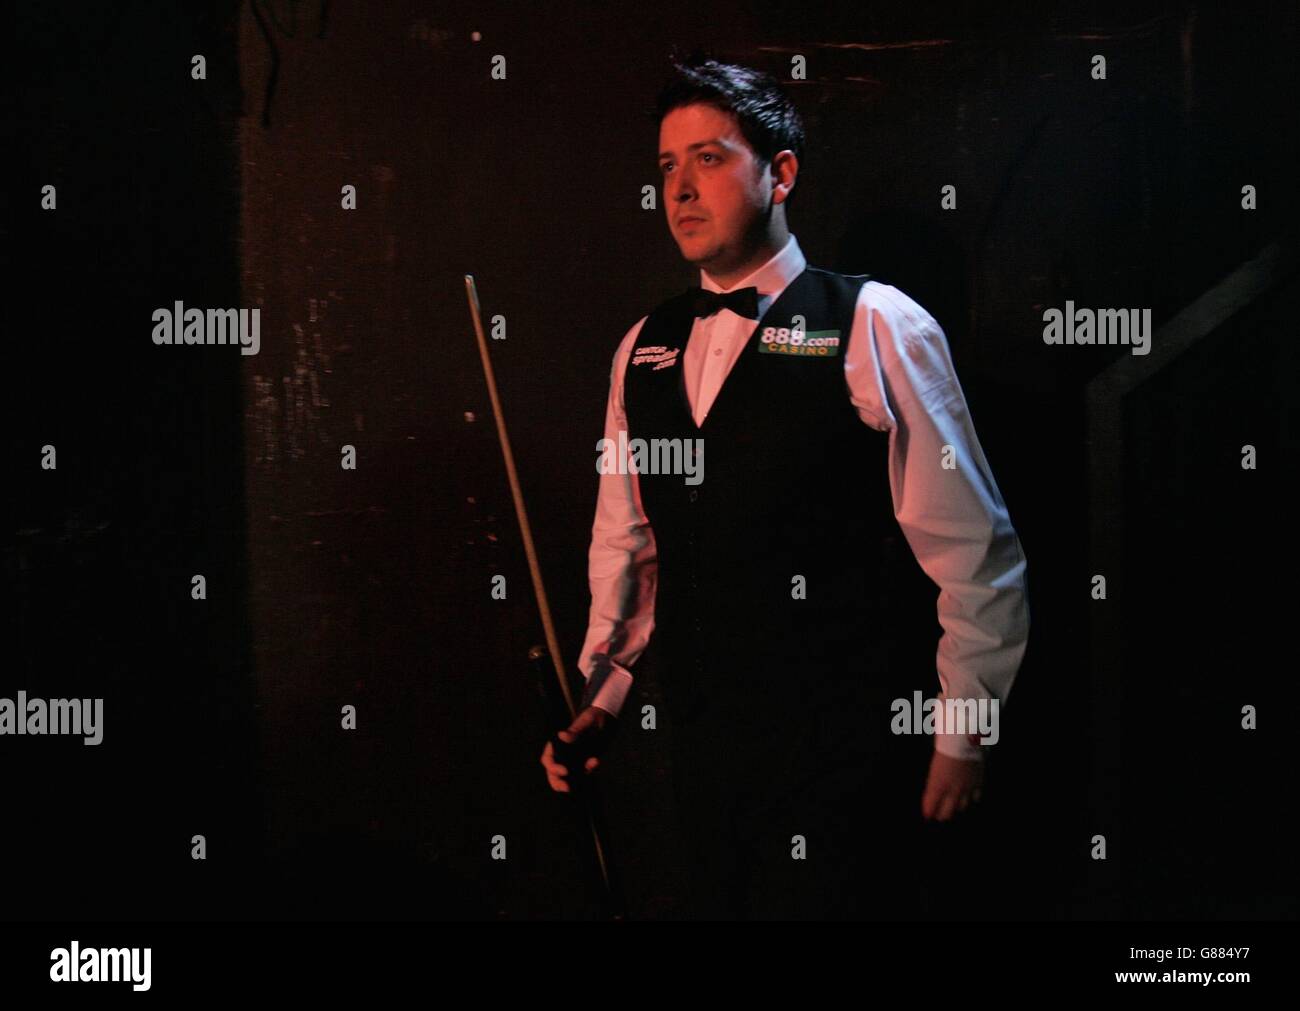 Snooker - Embassy World Championship 2005 - Jimmy White gegen Matthew Stevens - The Crucible. Matthew Stevens hinter der Bühne. Stockfoto